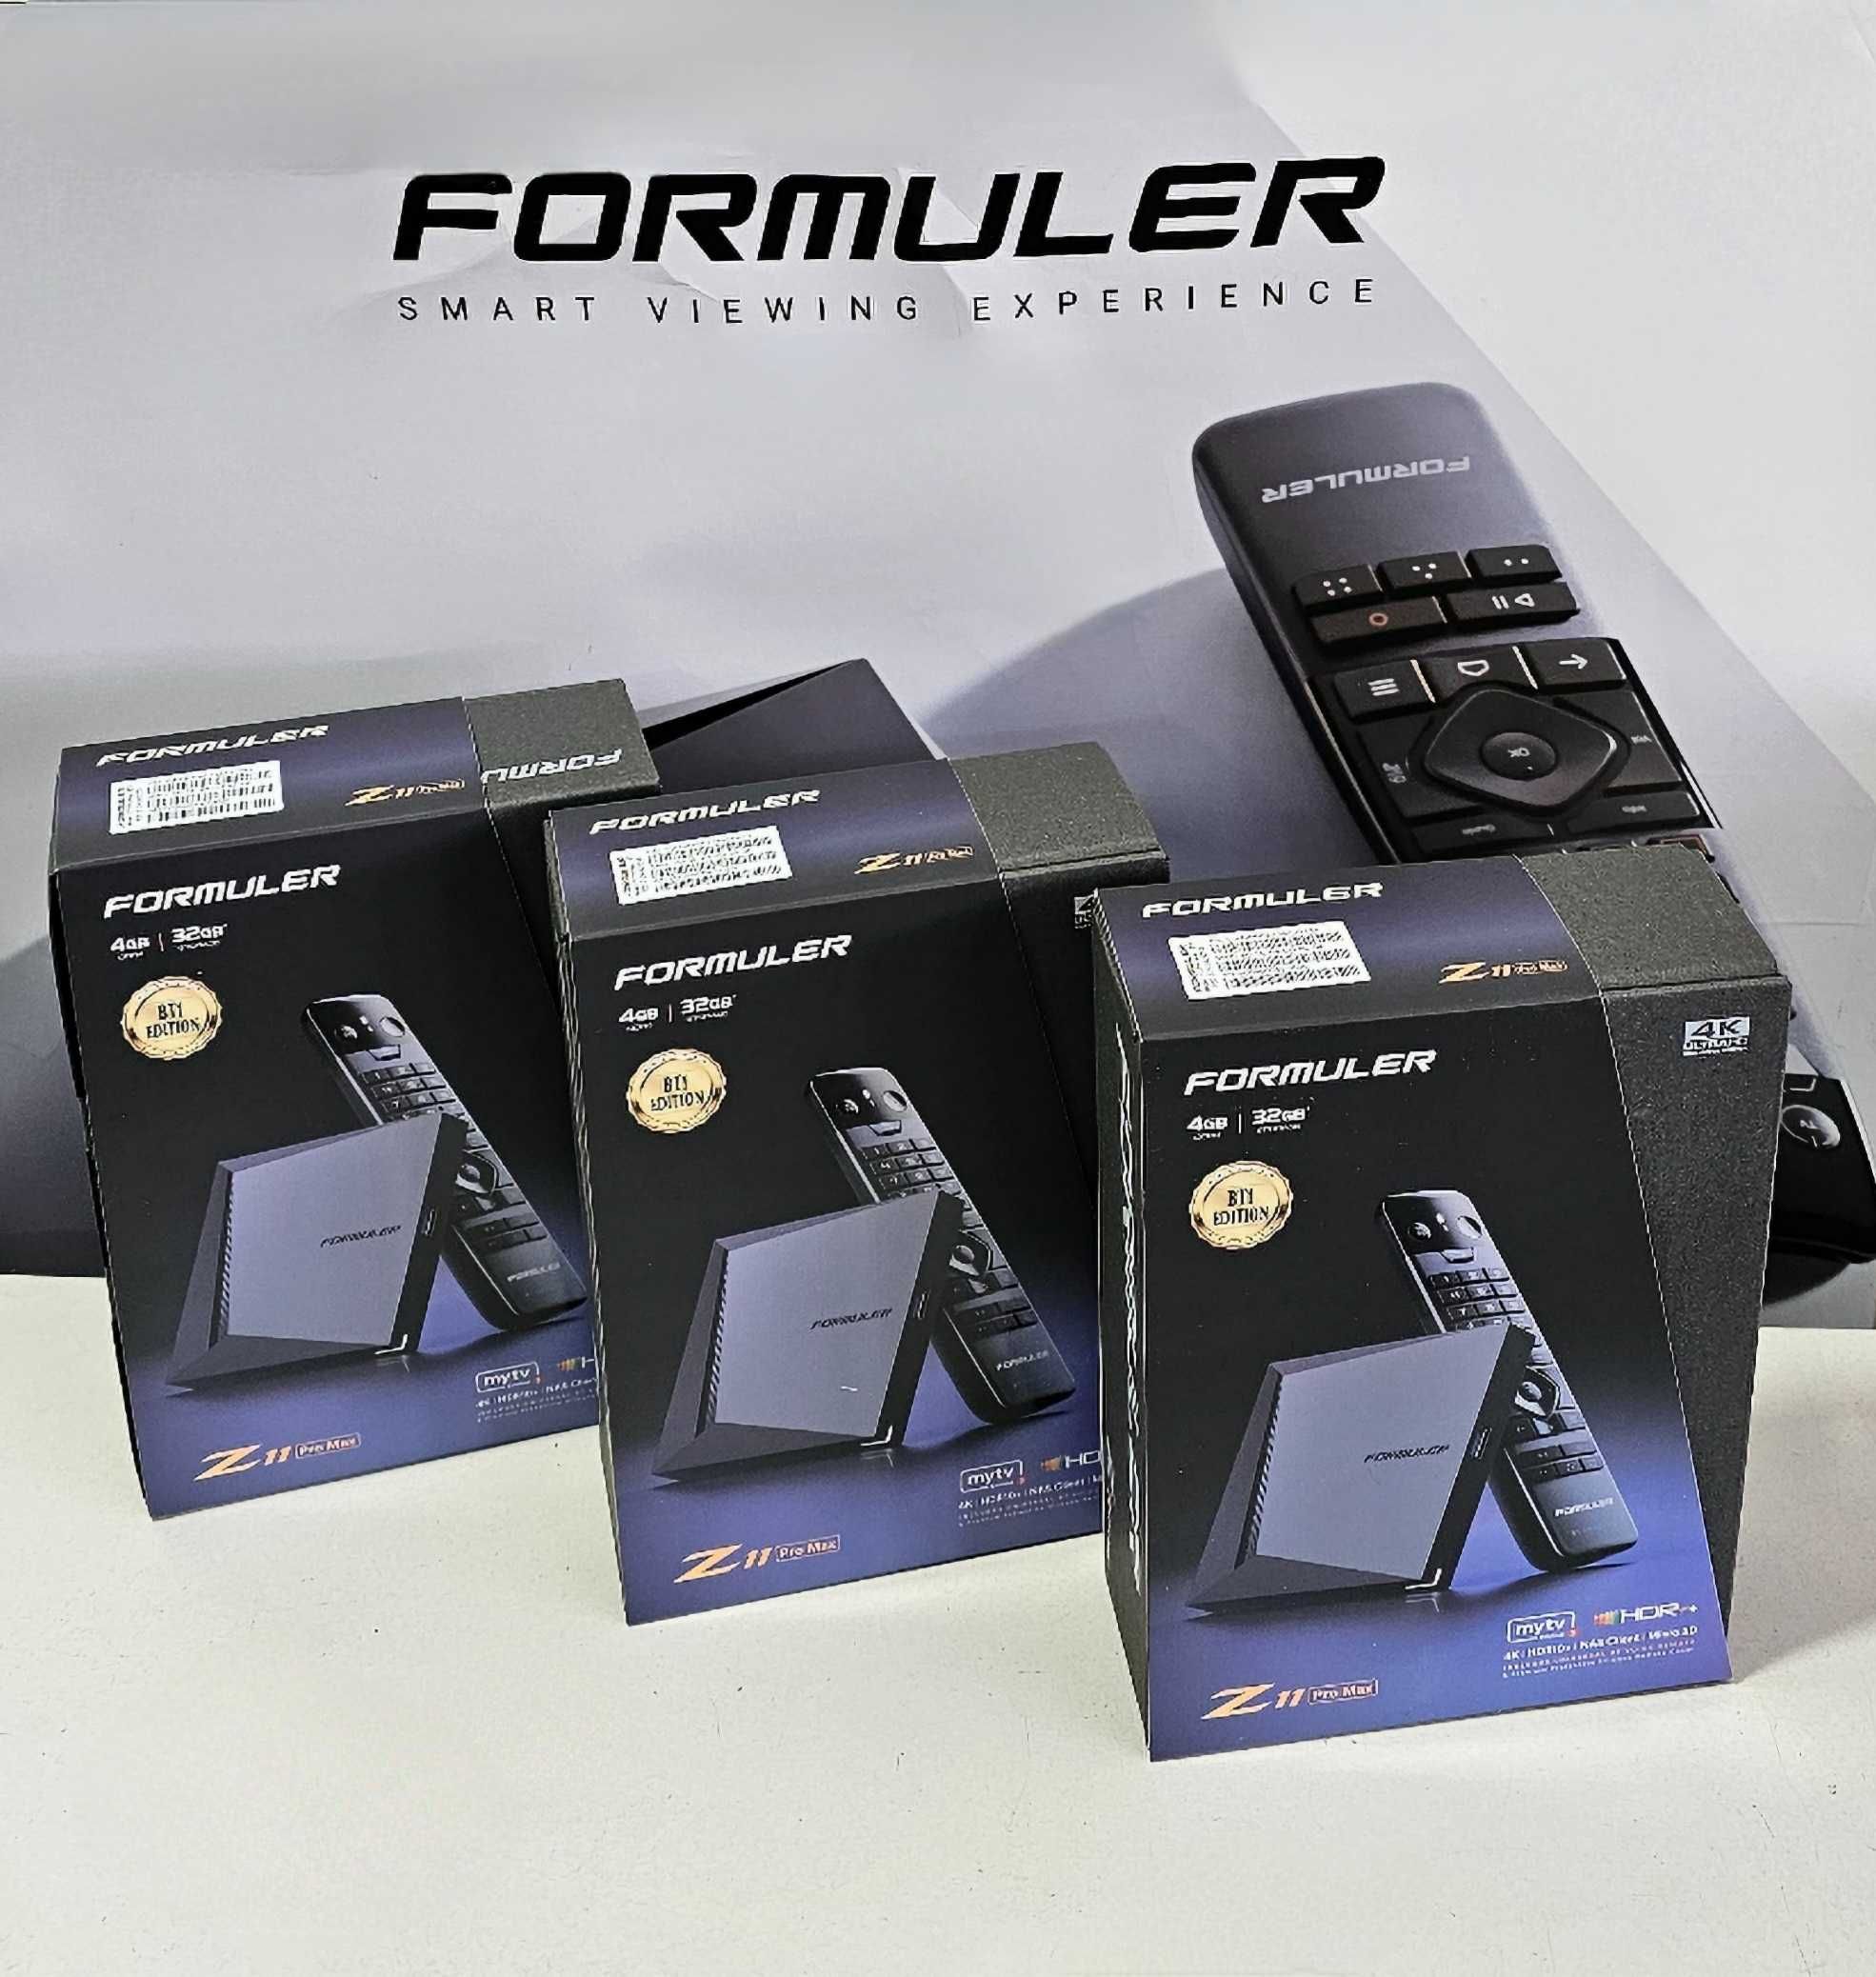 Formuler Z11 PRO MAX BT1 EDITION - MyTvOnline3 - 4GB/ 32GB - Braga • OLX  Portugal